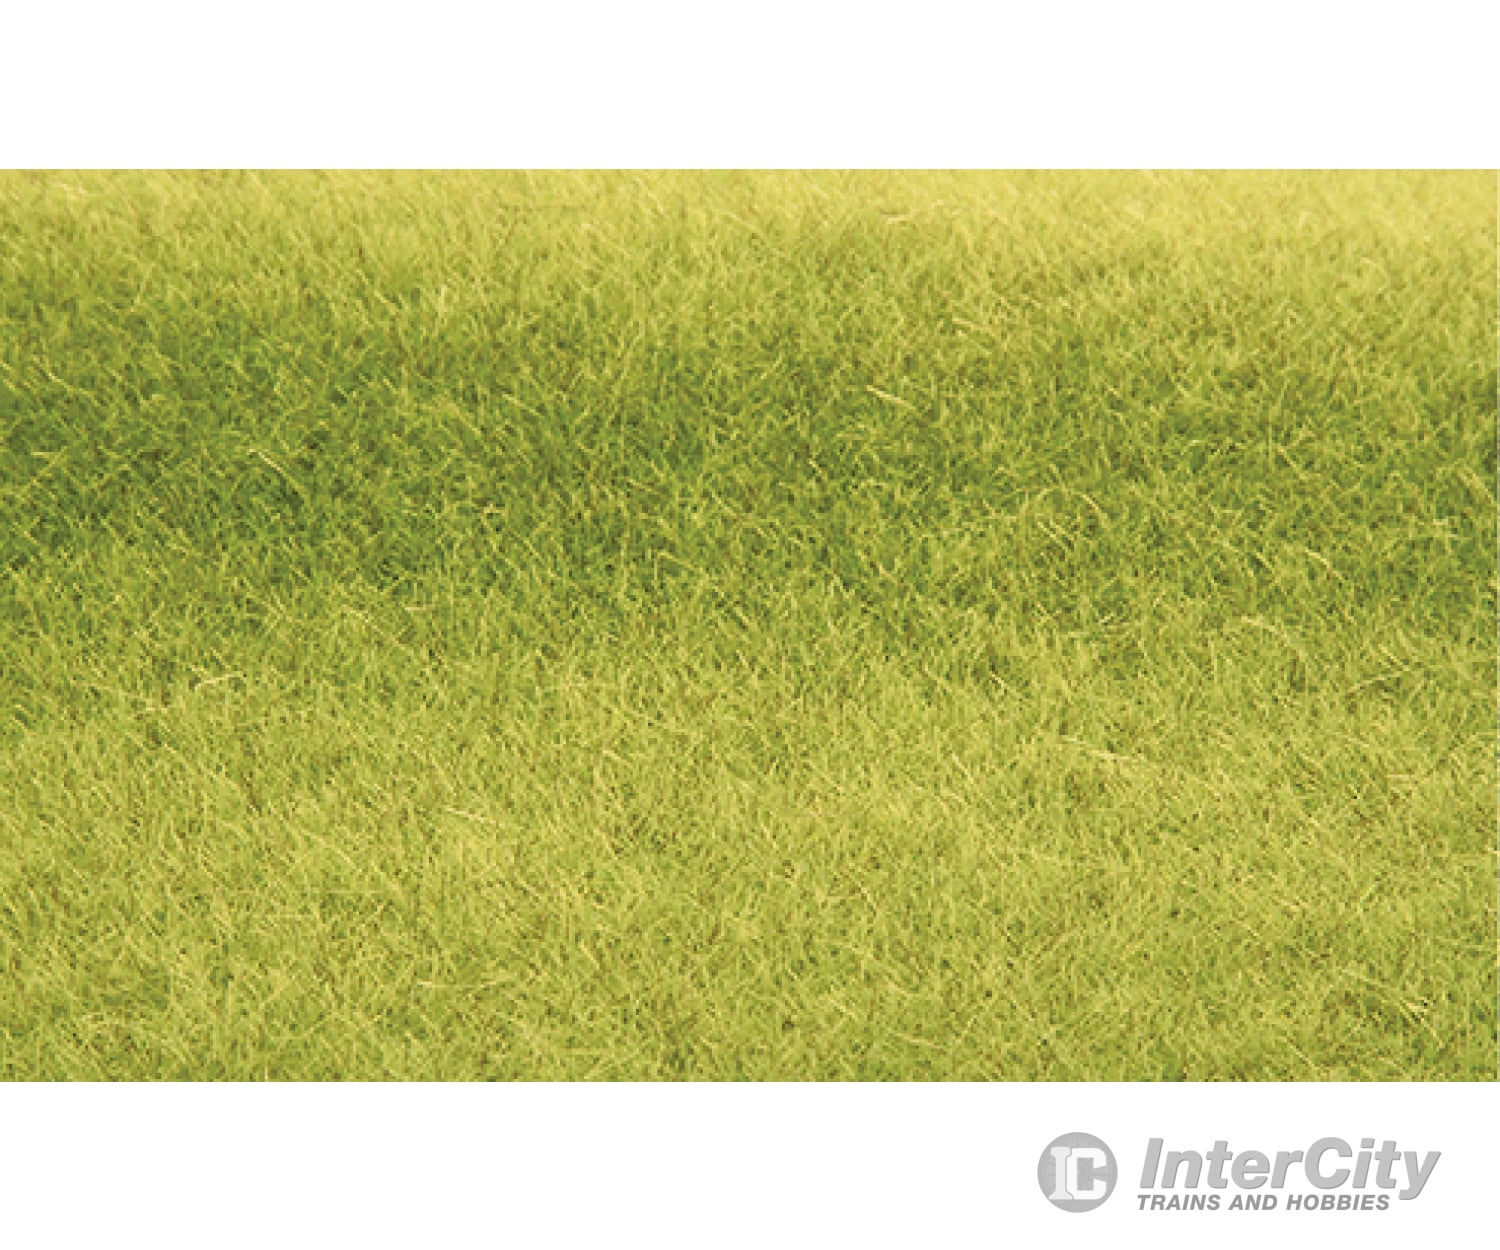 Heki 1860 Tuftgrass(R) Pad - 17-1/2 X 6-1/2 44.5 16.5Cm -- Meadow Green Grass & Scenery Mats